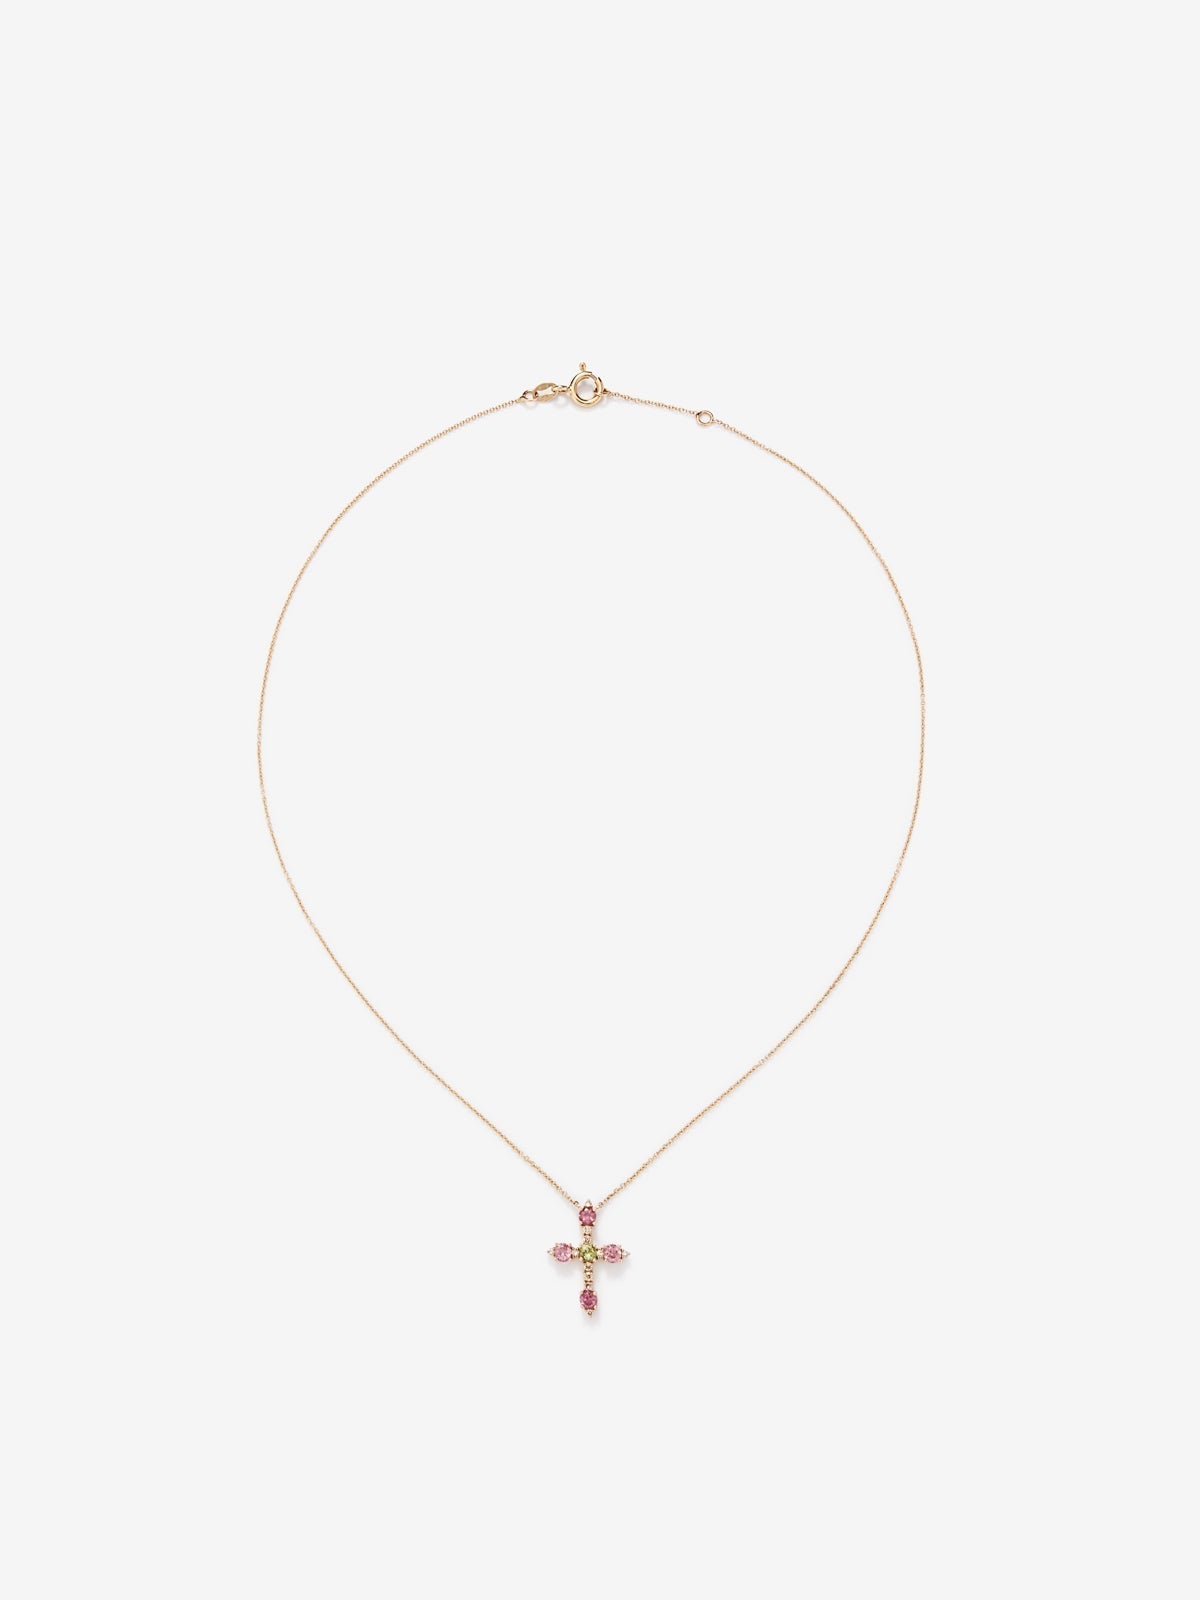 18K Rose Gold Cross Pendant Chain with Tourmaline and Diamond